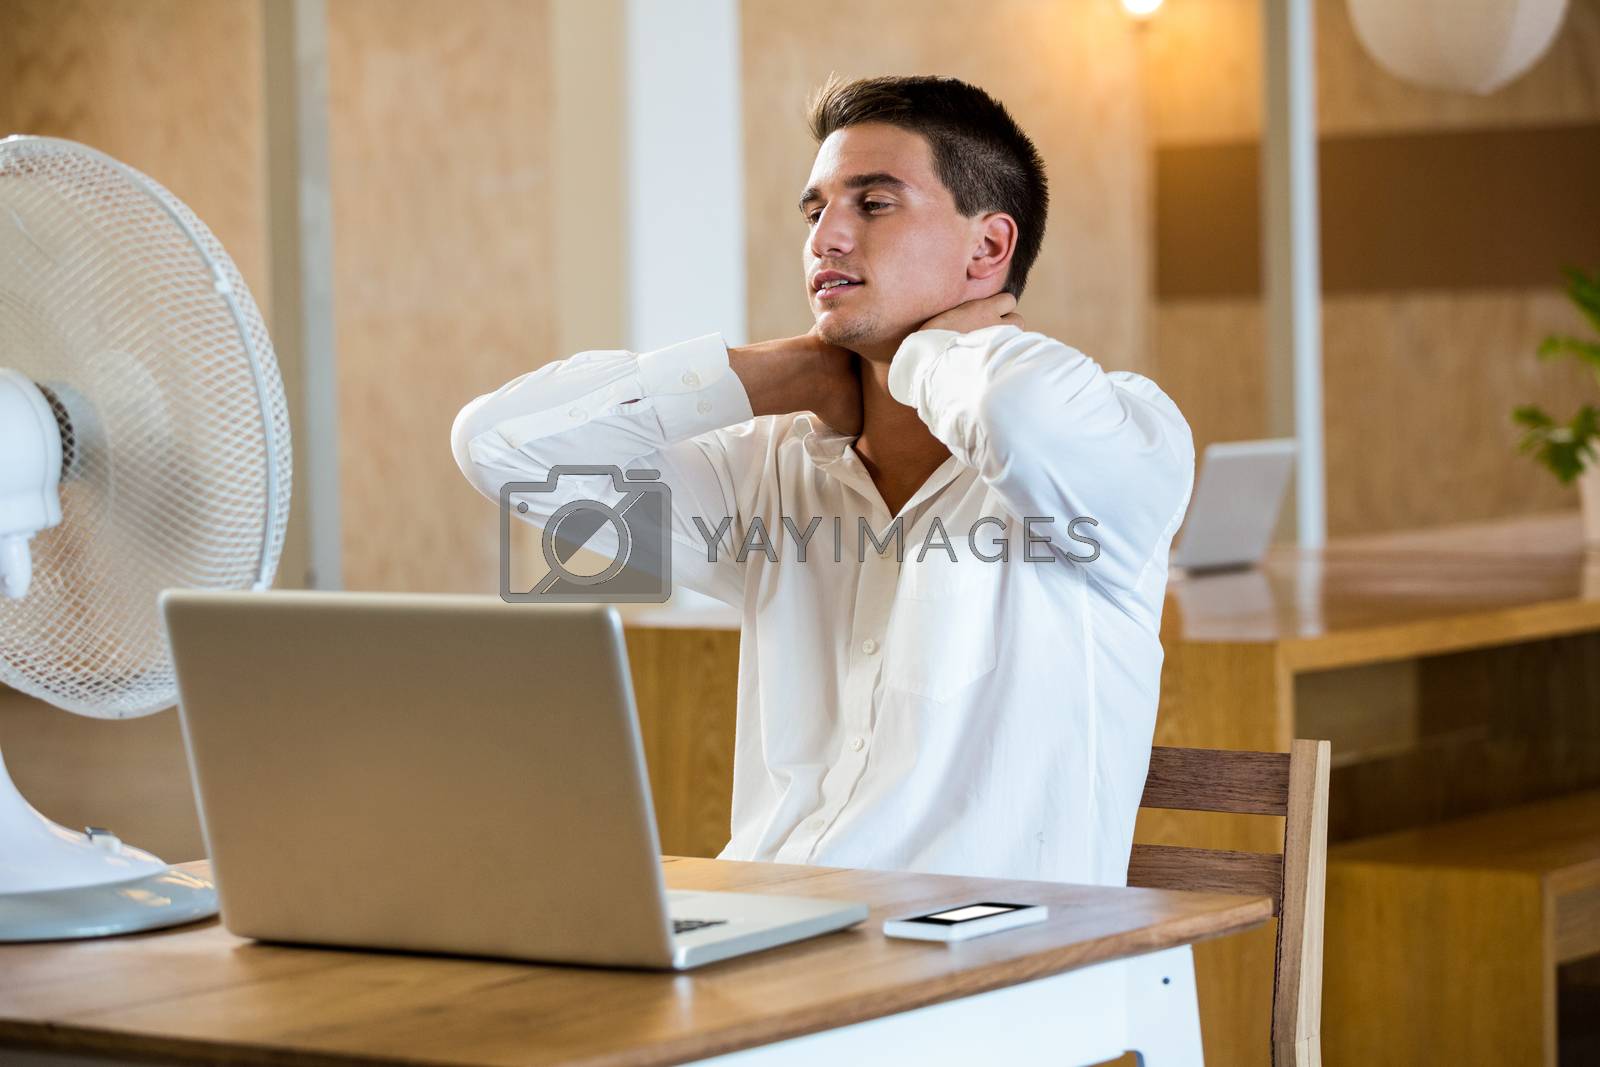 Royalty free image of Man enjoying a breeze while using laptop by Wavebreakmedia